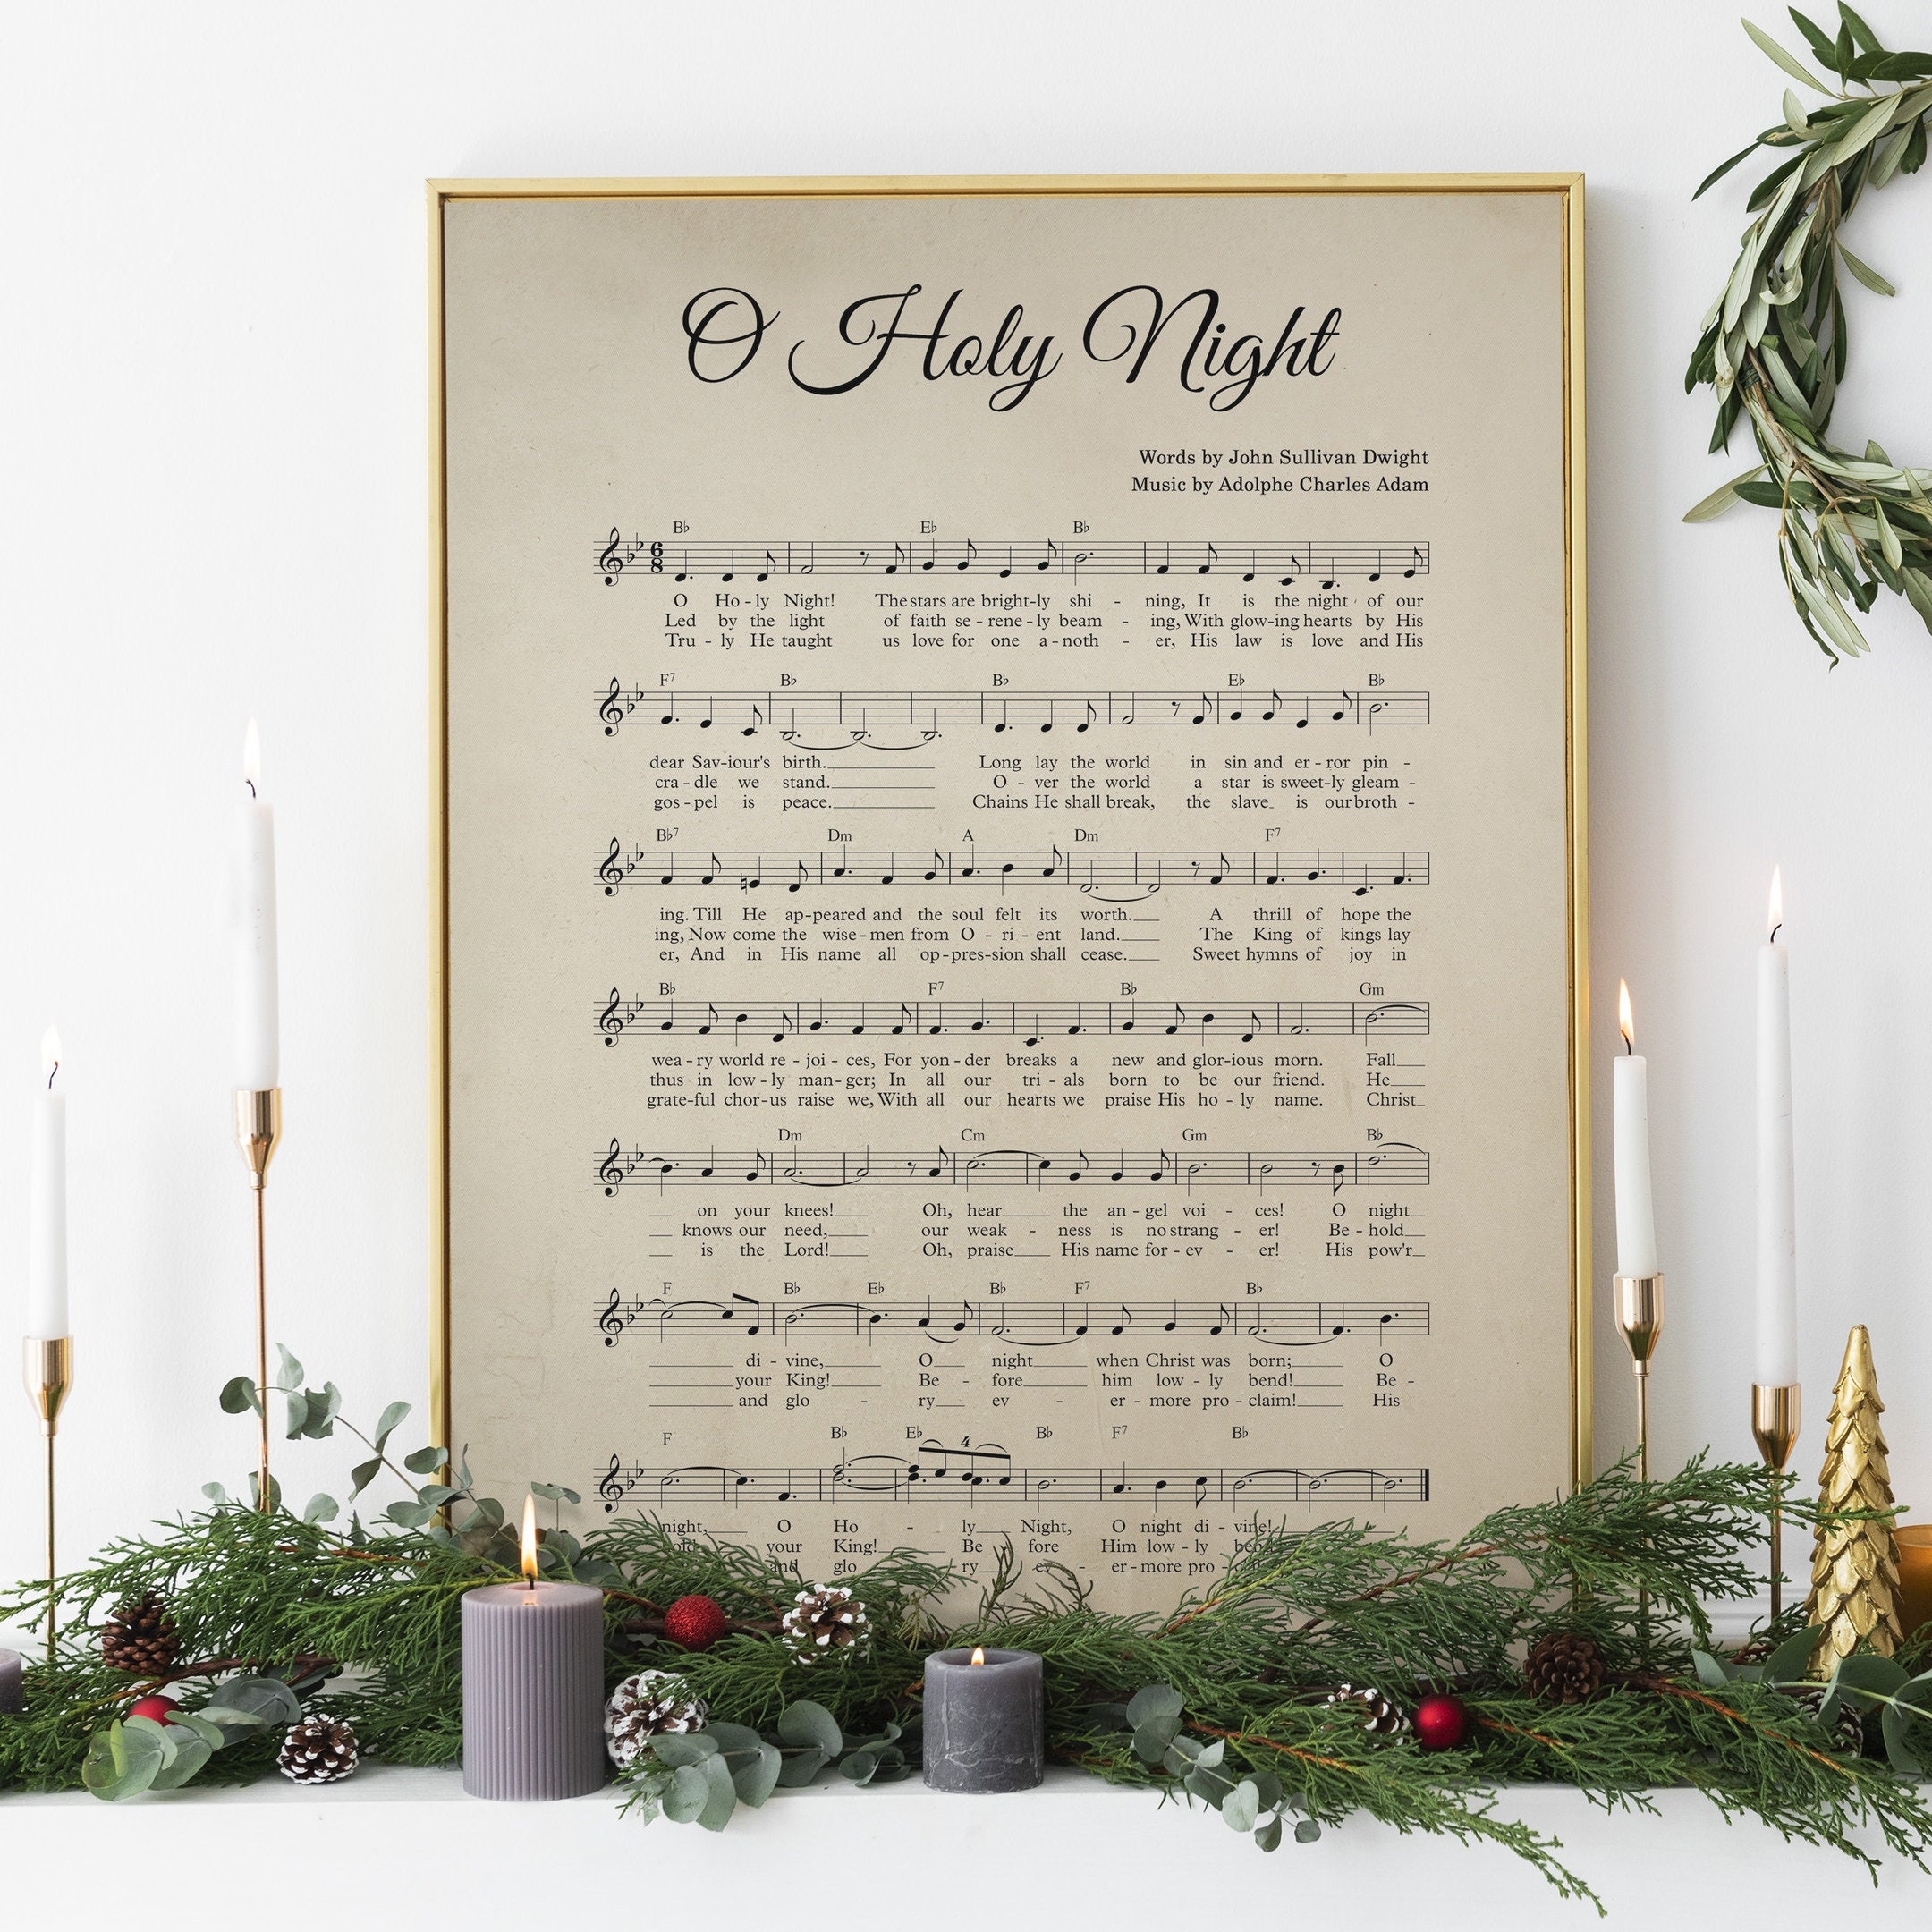  O Holy Night Christmas Carol Music Song Lyrics Text Gift  Sweatshirt : Clothing, Shoes & Jewelry